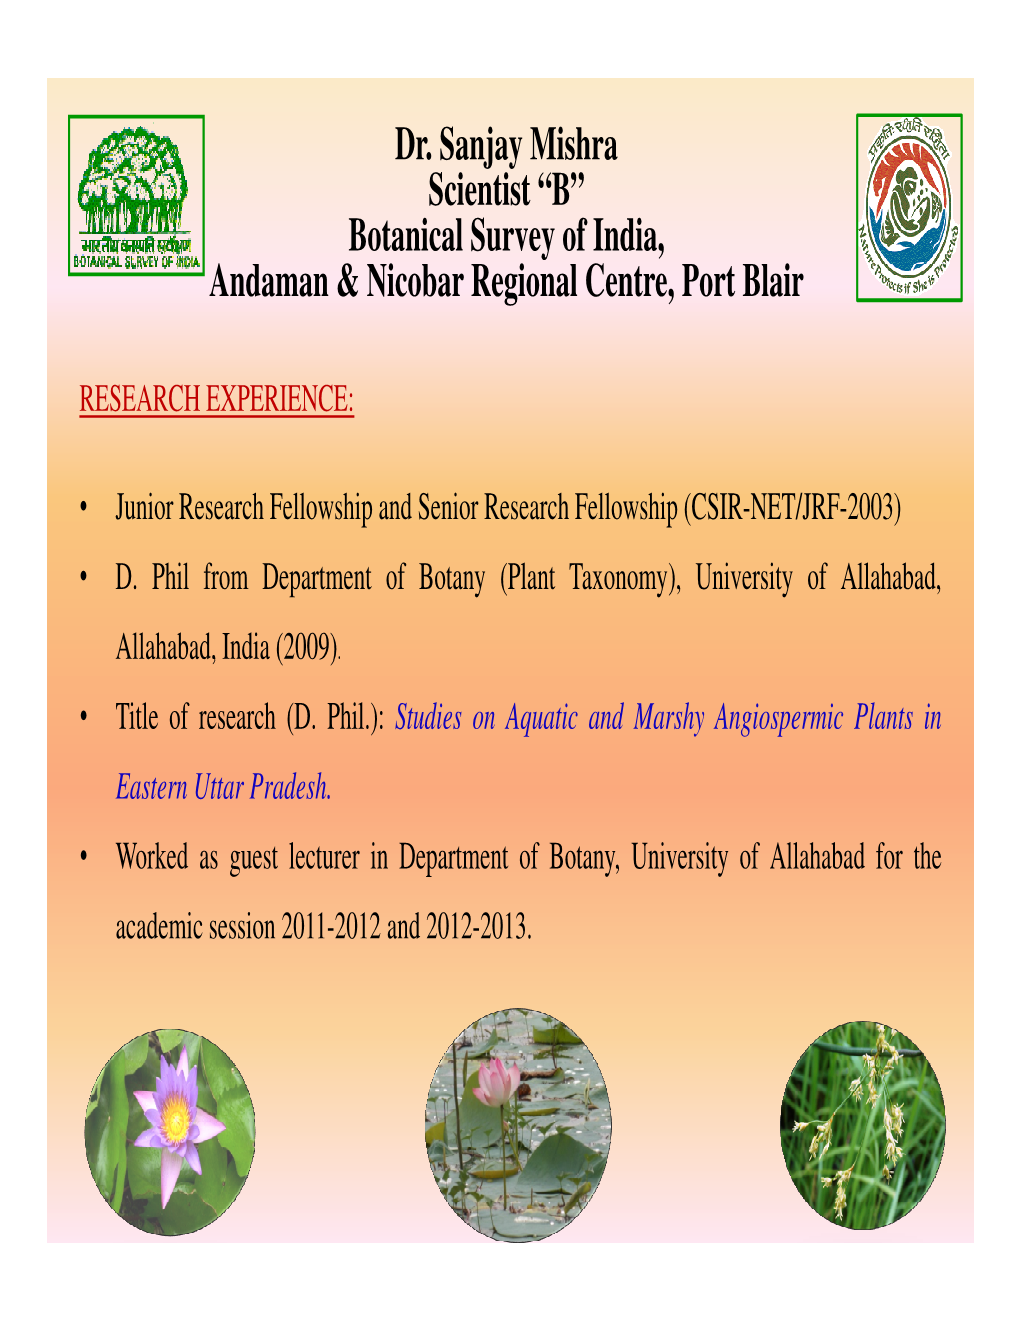 Dr. Sanjay Mishra Scientist “B” Botanical Survey of India, Andaman & Nicobar Regional Centre, Port Blair